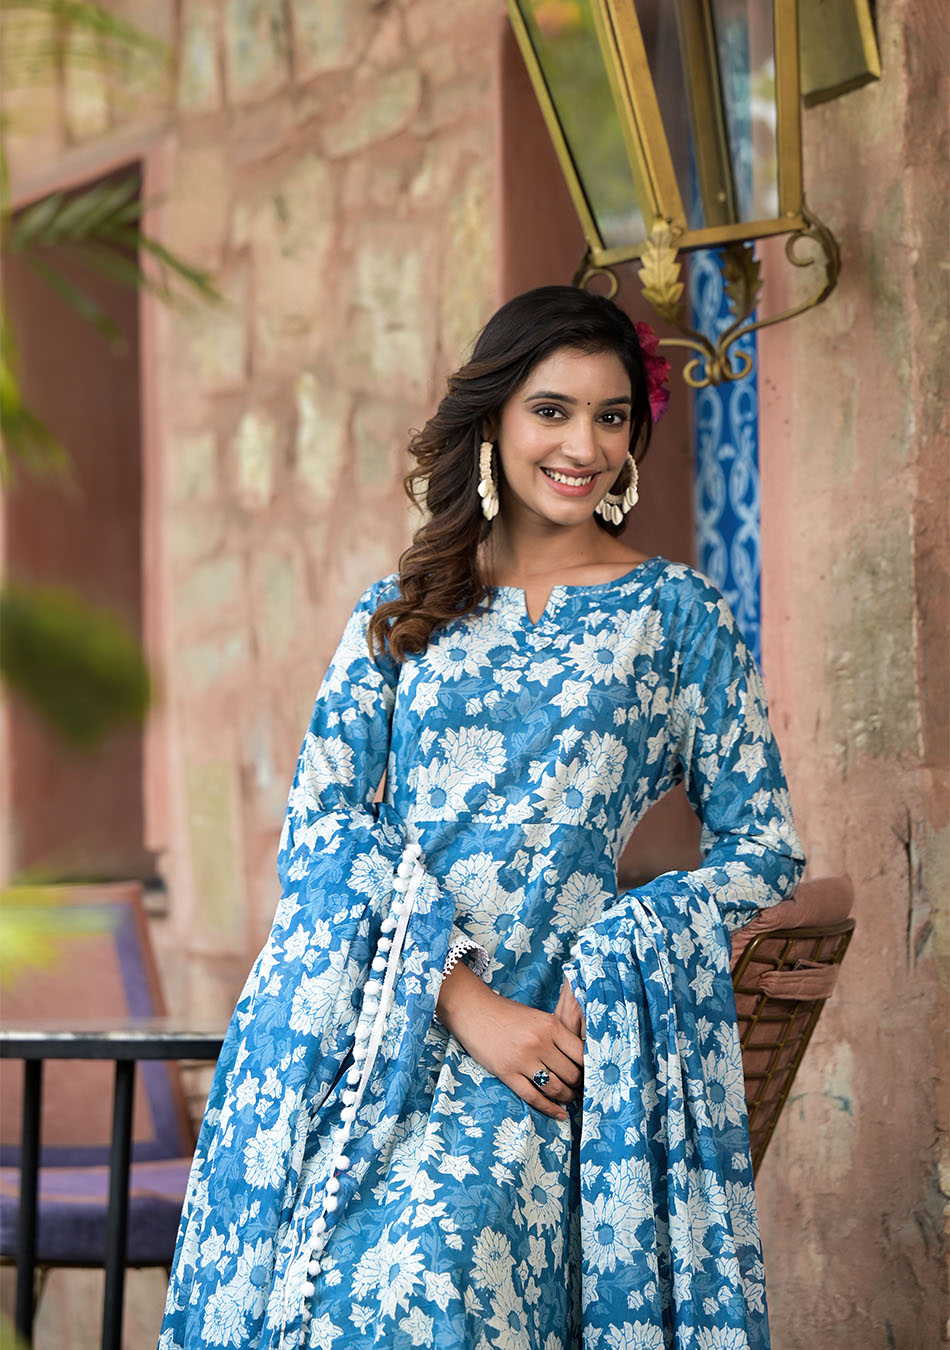 Floral Blue Anarkali Suit with Dupatta